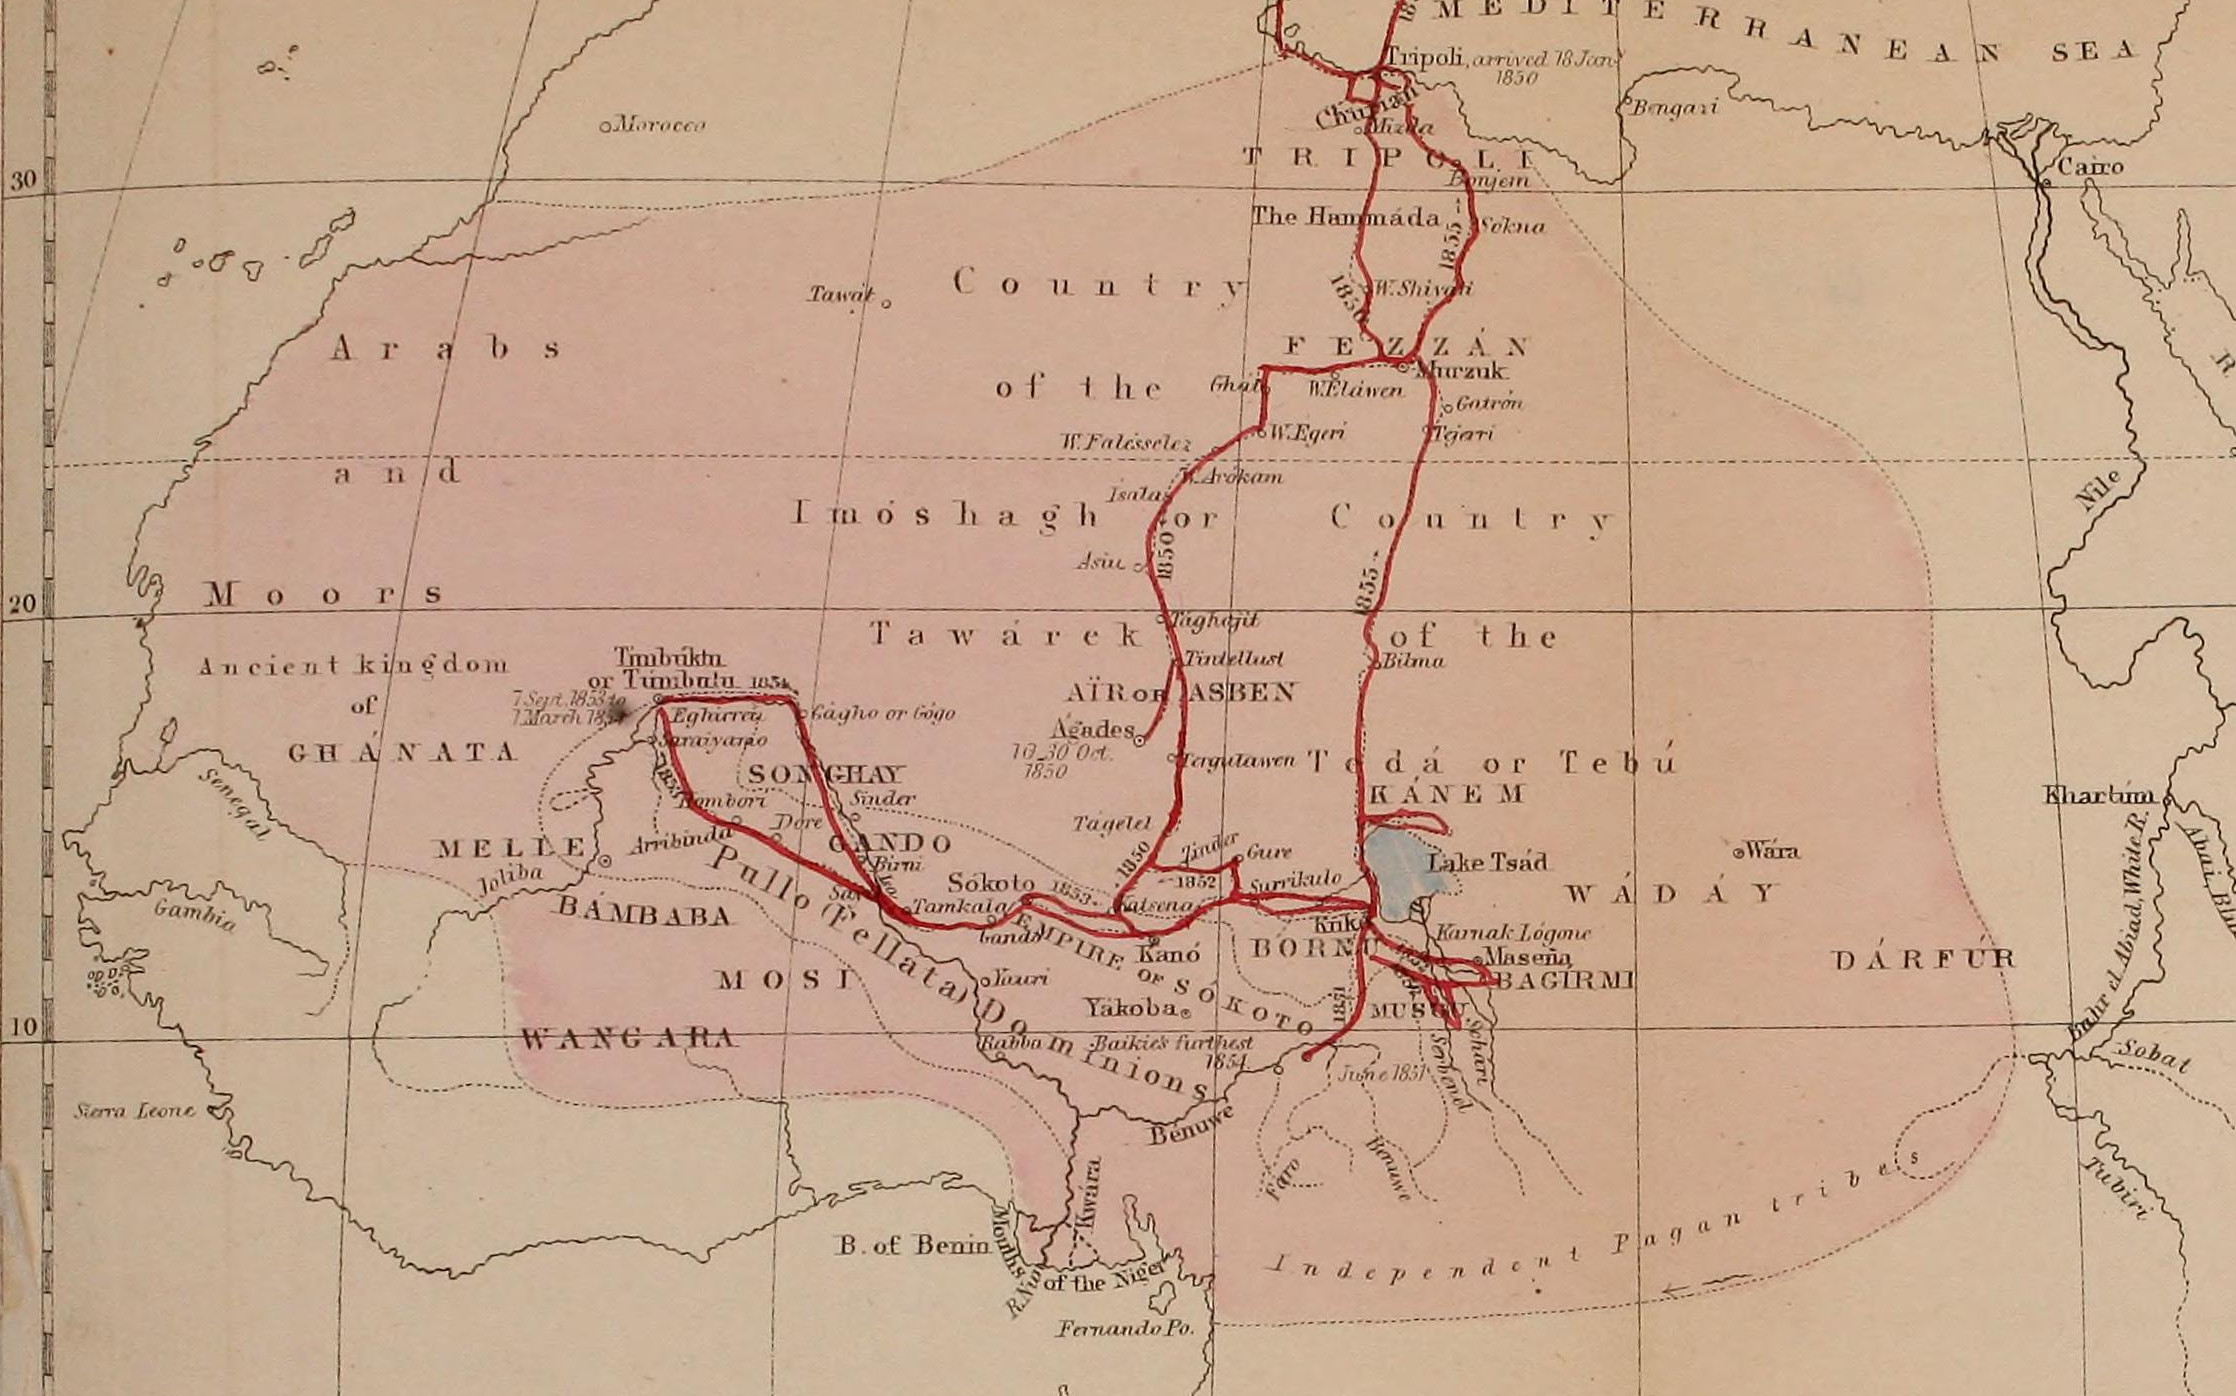 Heinrich Barths route through Africa 1850 to 1855